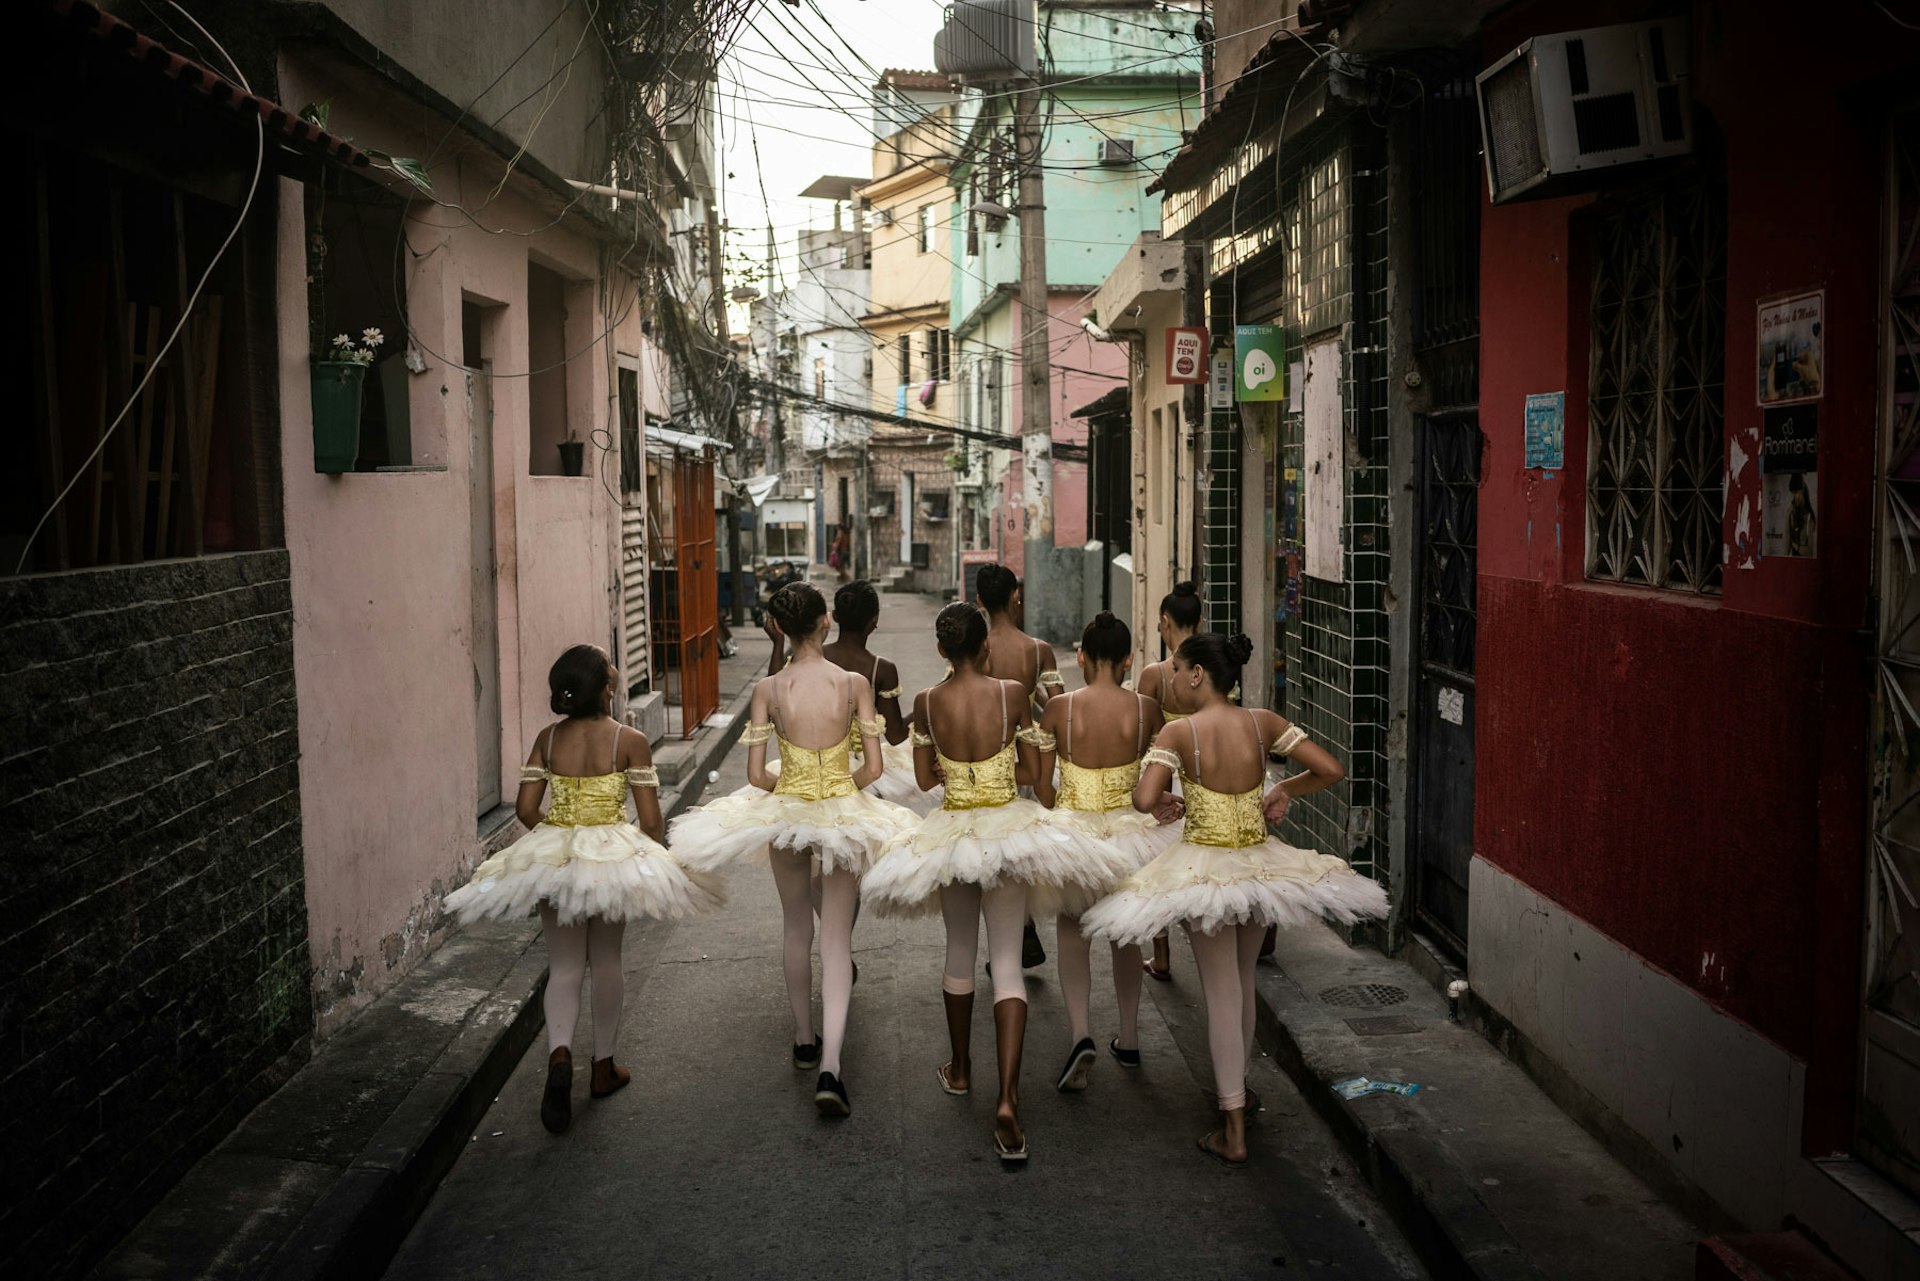 Favela ballet: inside a dance school unlike any other